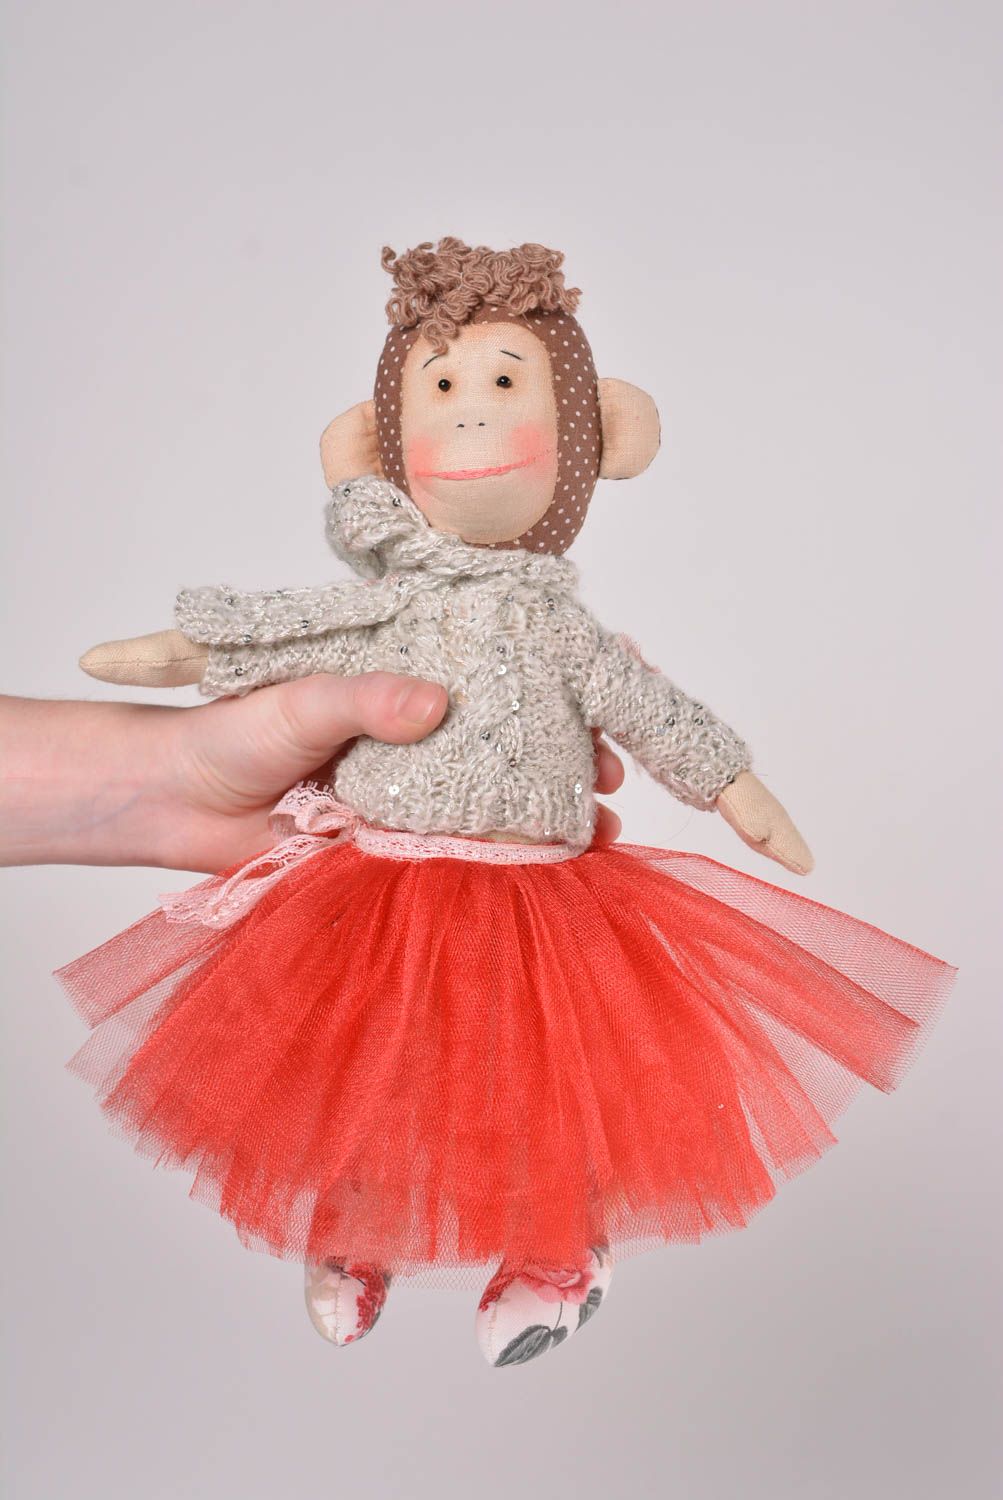 Beautiful handmade rag doll childrens toys stuffed soft toy nursery design photo 2